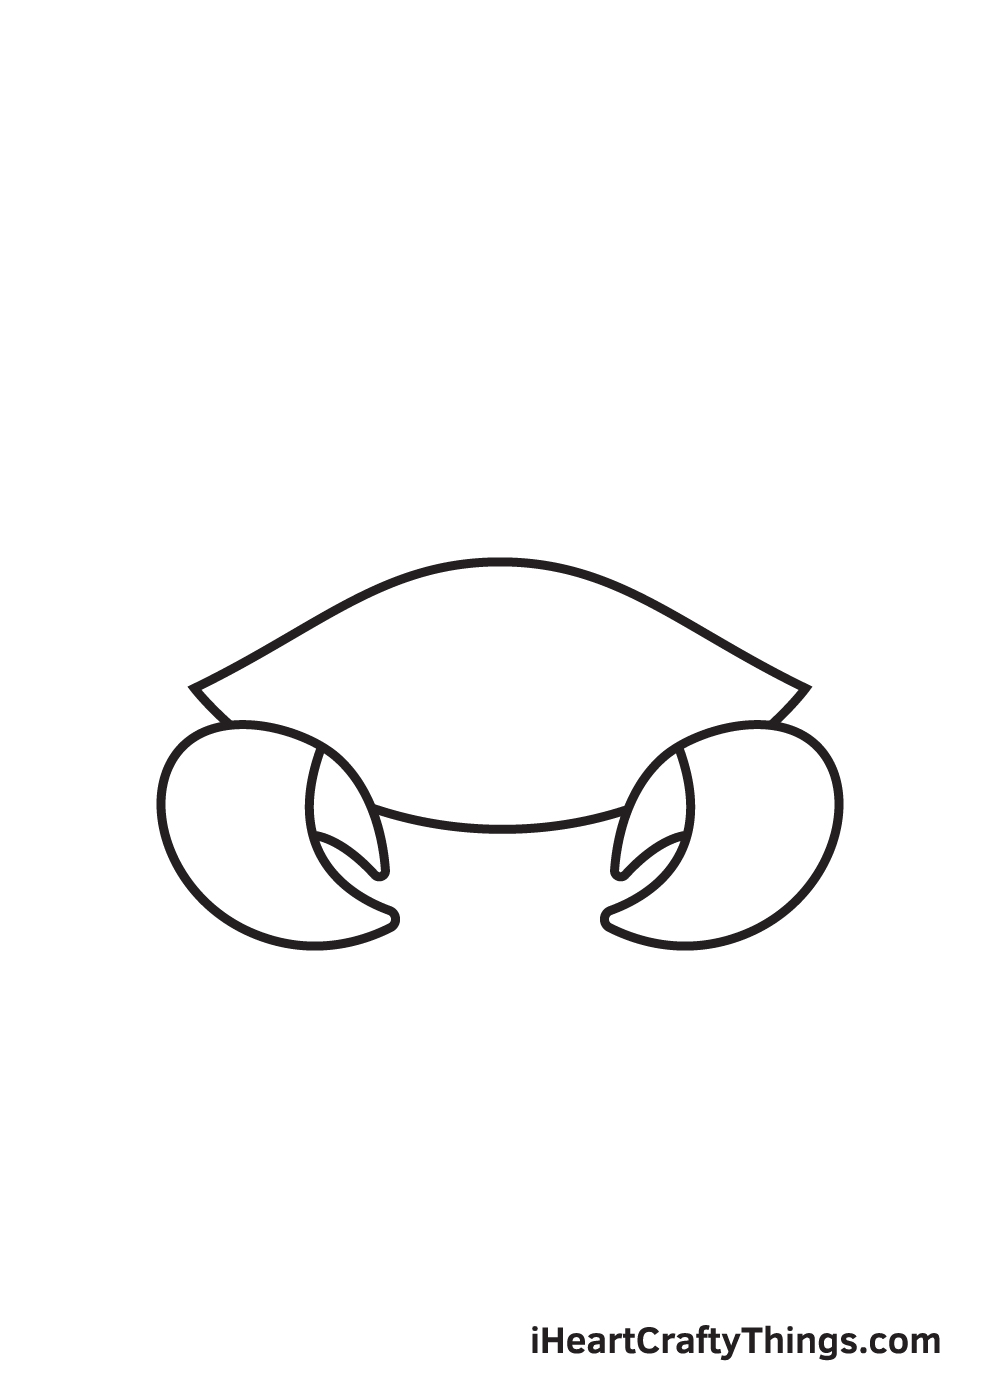 Crab Drawing – Step 3